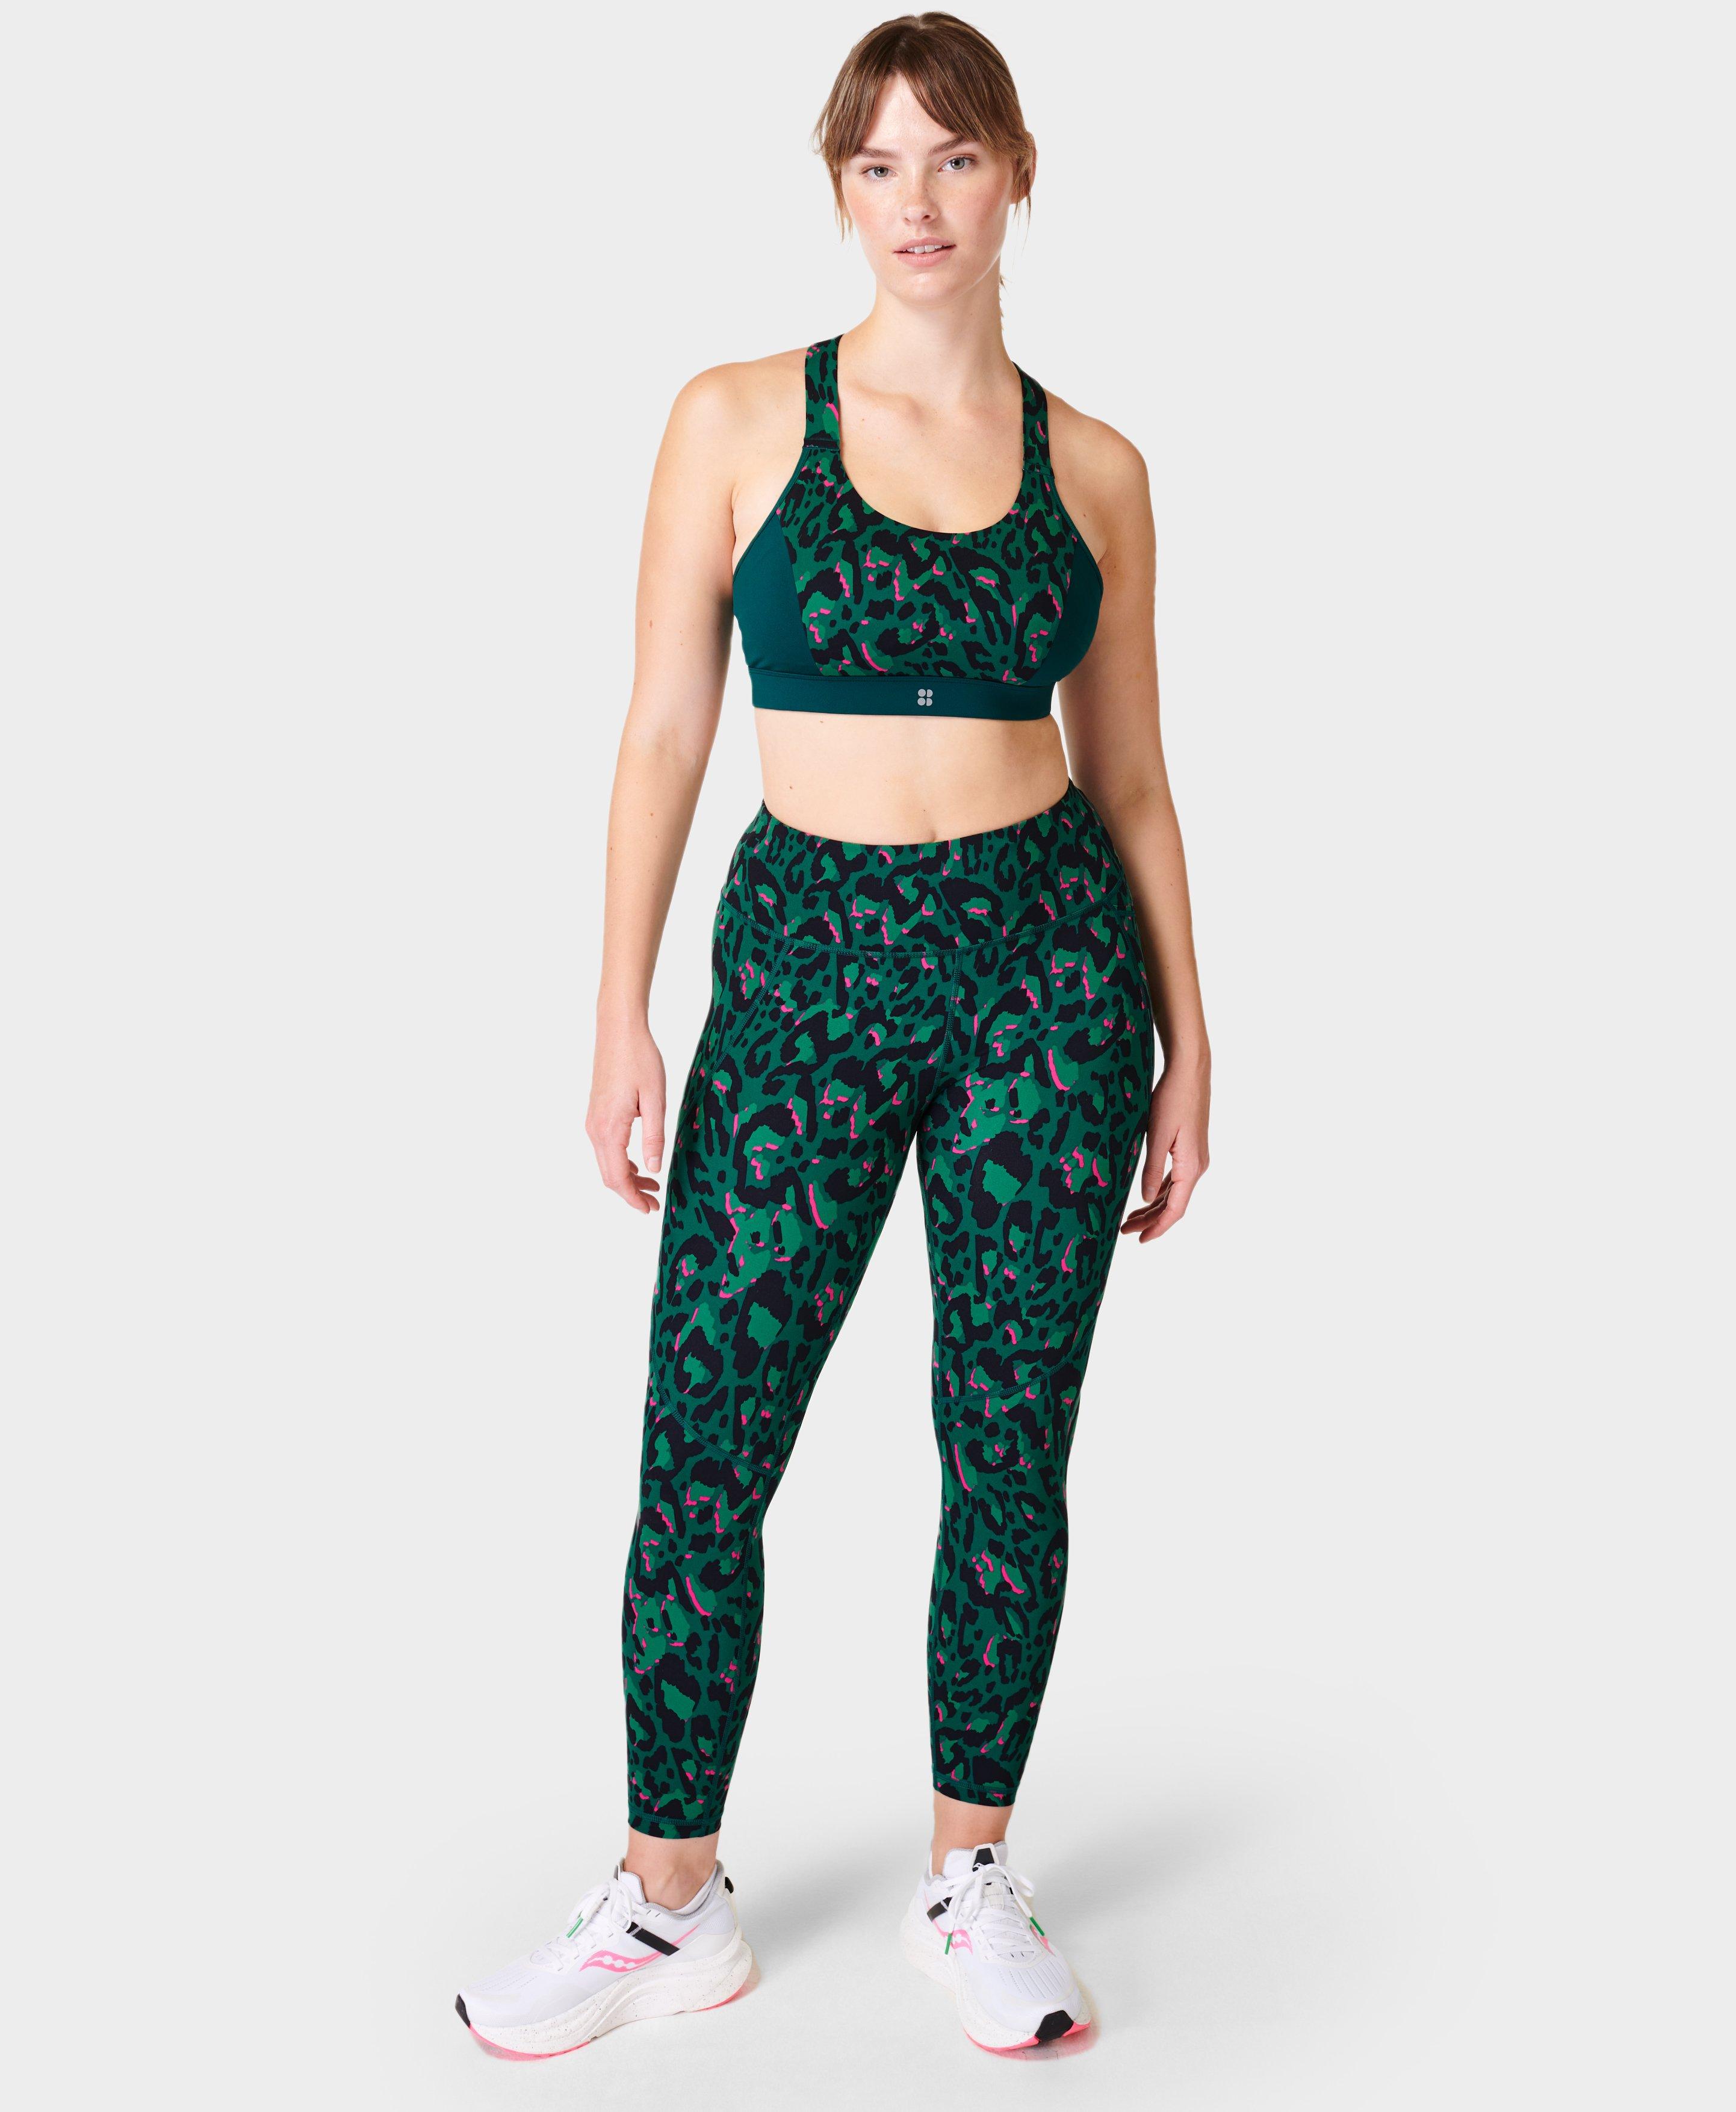 Womens Two Tone 7/8 Foldover Stretch Fabirc Workout Yoga Gym Leggings Pants  - Black / Green, S